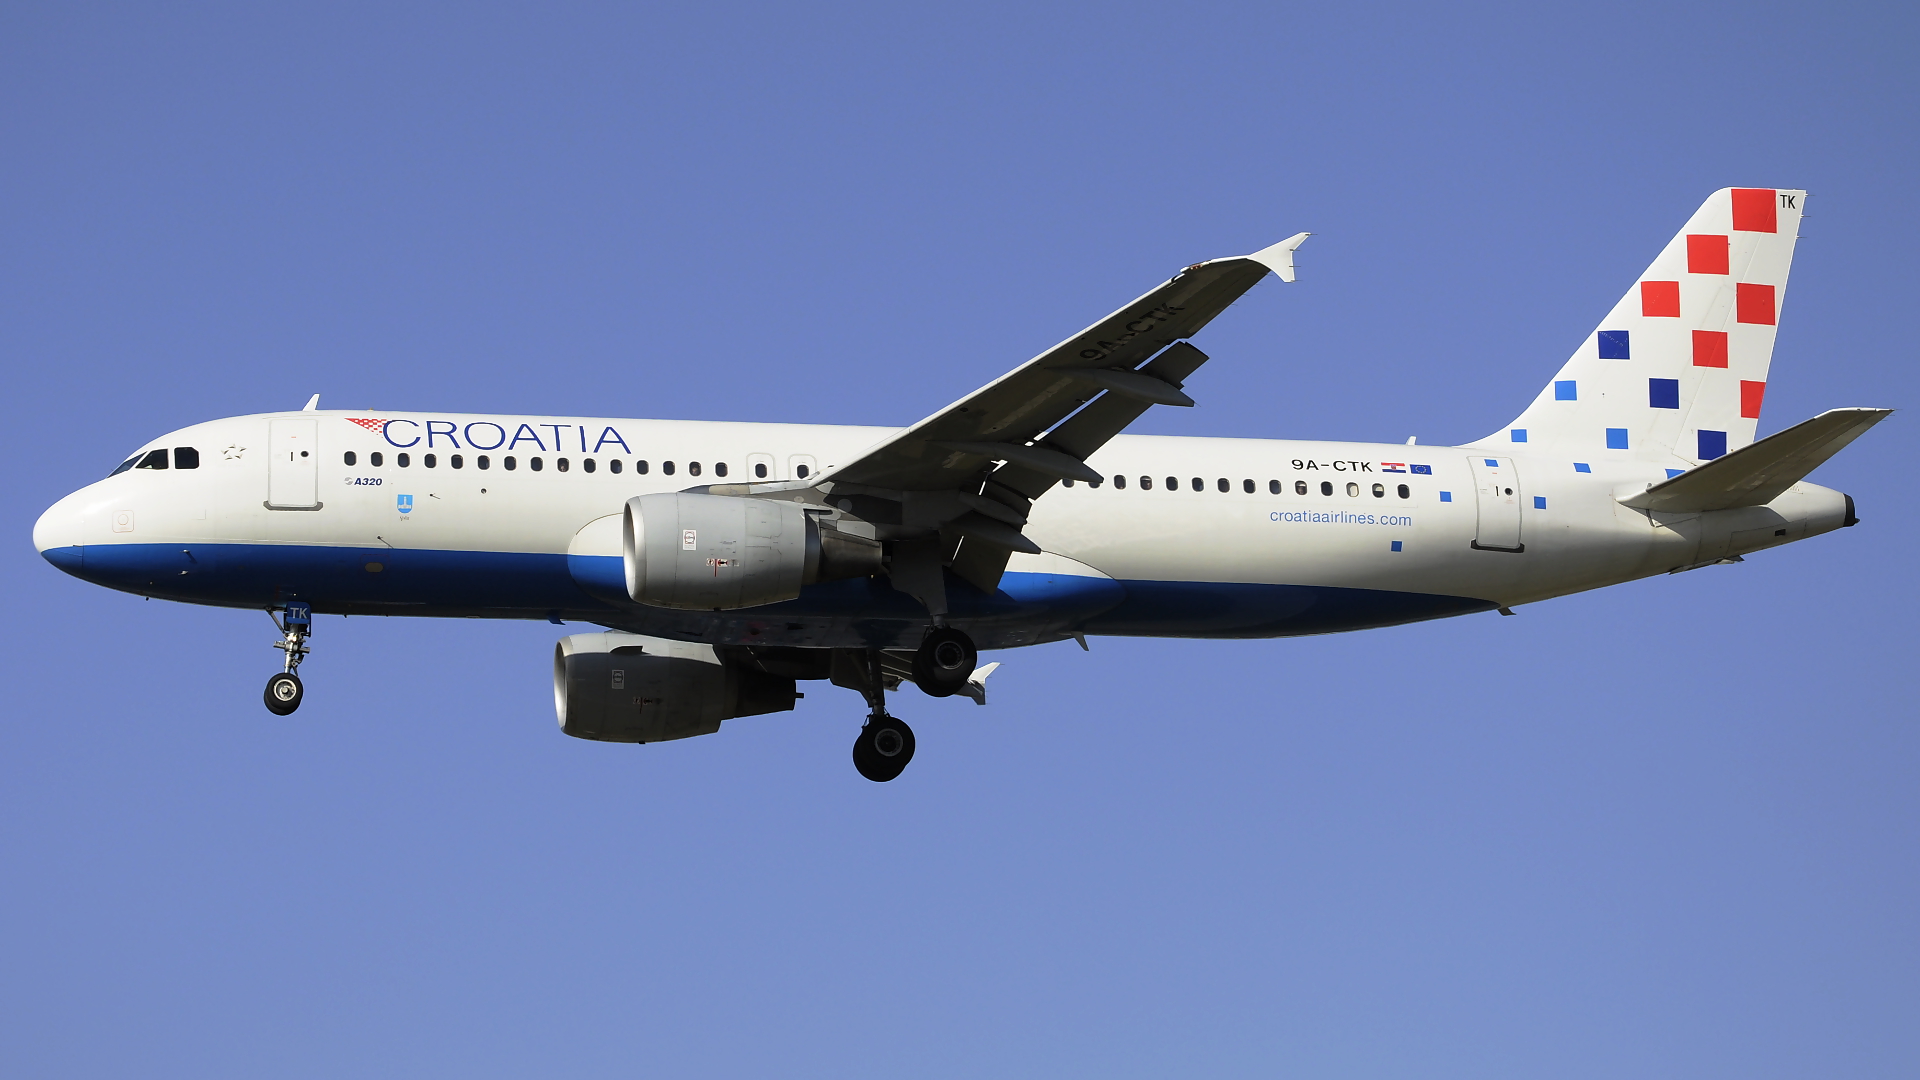 9A-CTK ✈ Croatia Airlines Airbus 320-214 @ London-Heathrow